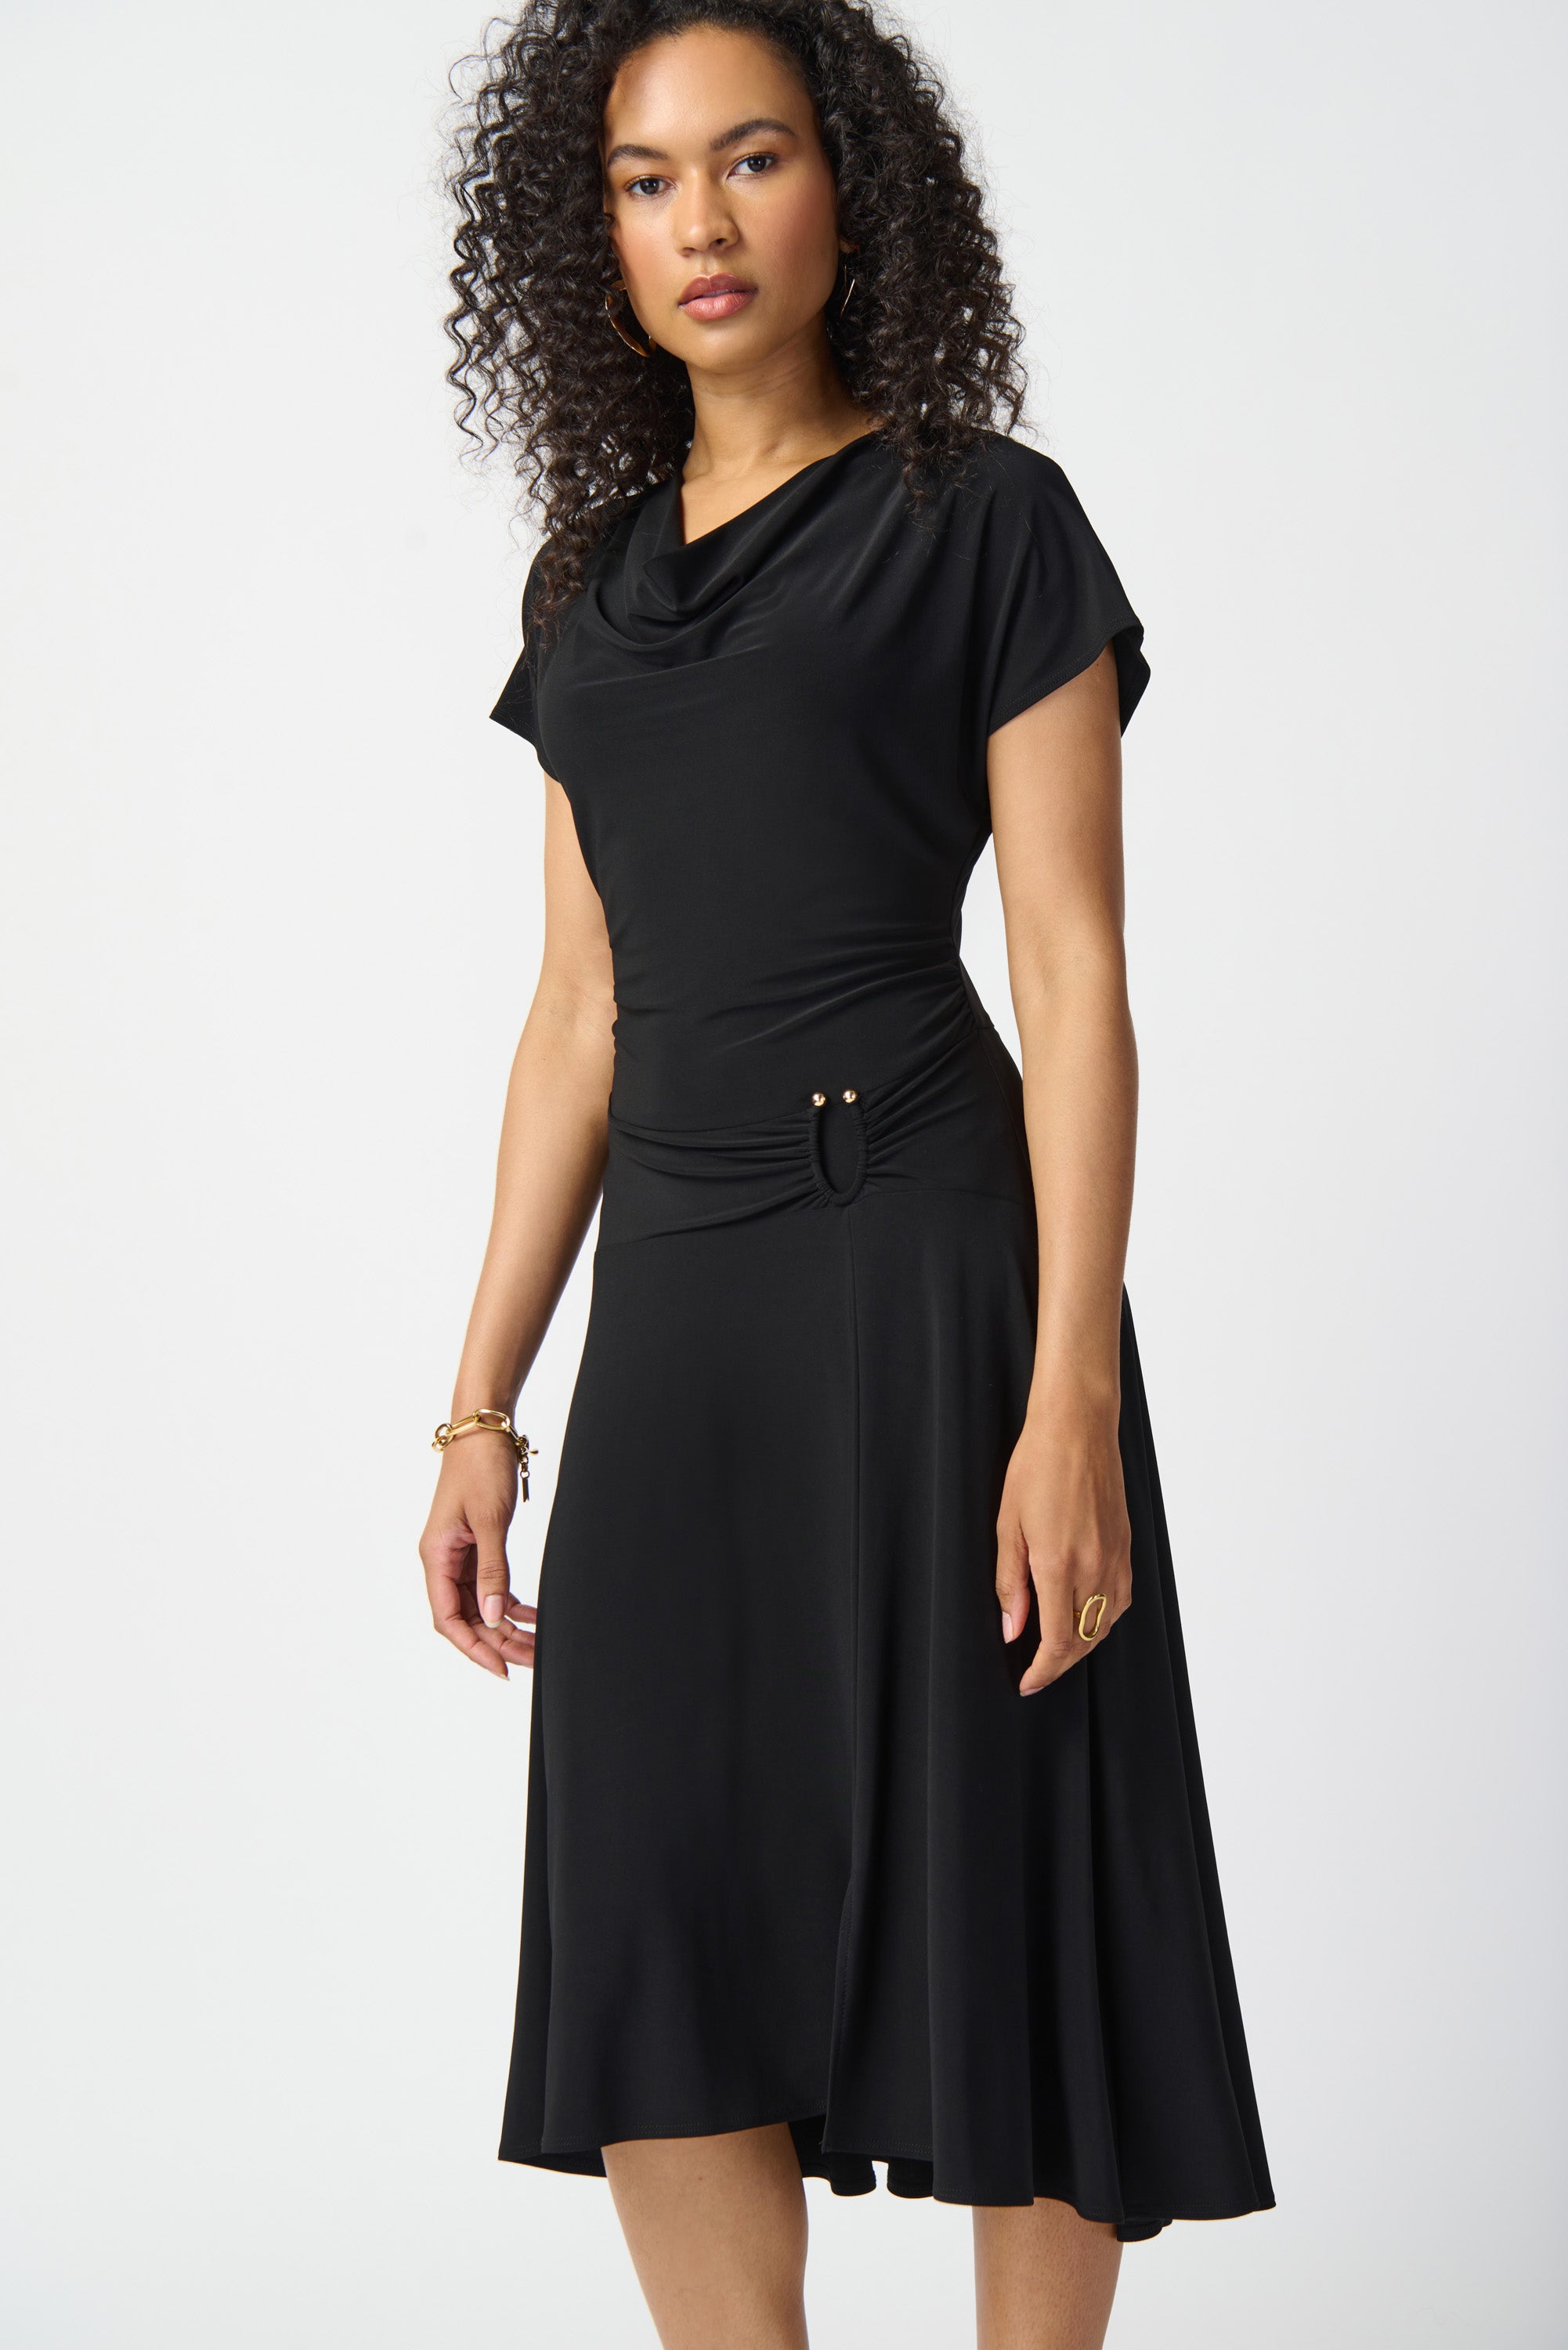  Rekucci Women's Classic Chic Shift Dress (4, Black) : Clothing,  Shoes & Jewelry